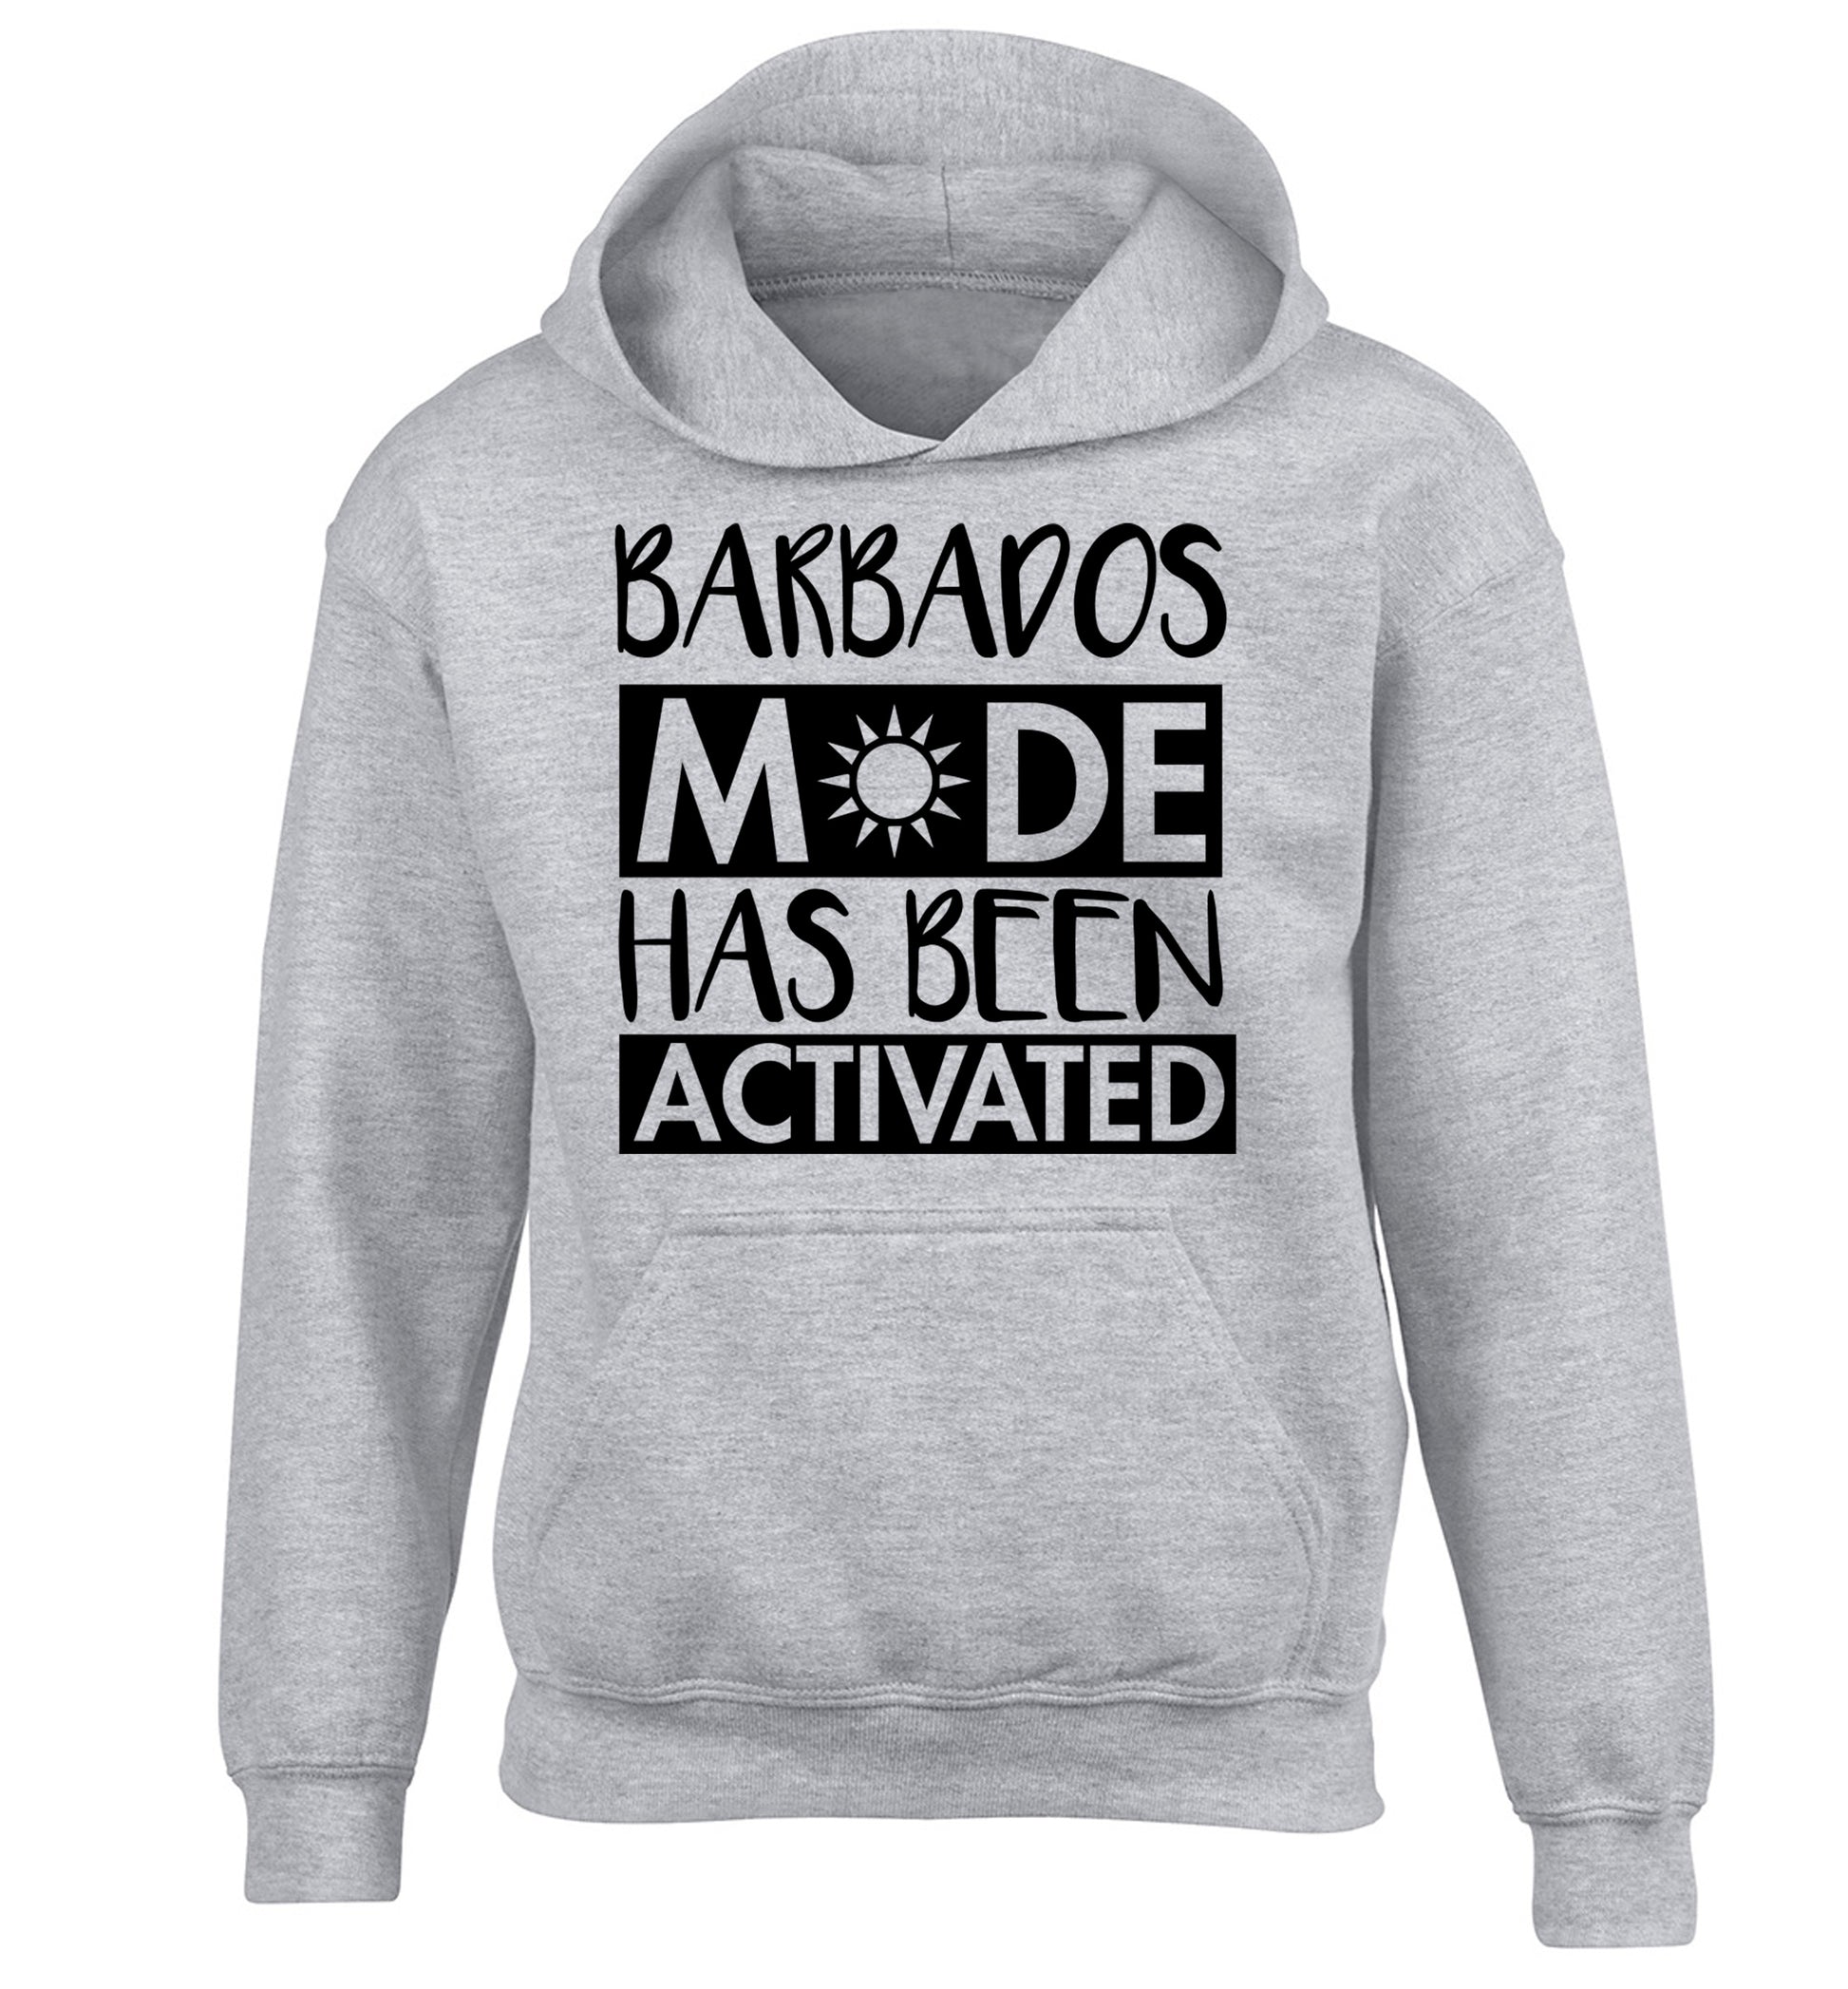 Barbados mode has been activated children's grey hoodie 12-13 Years